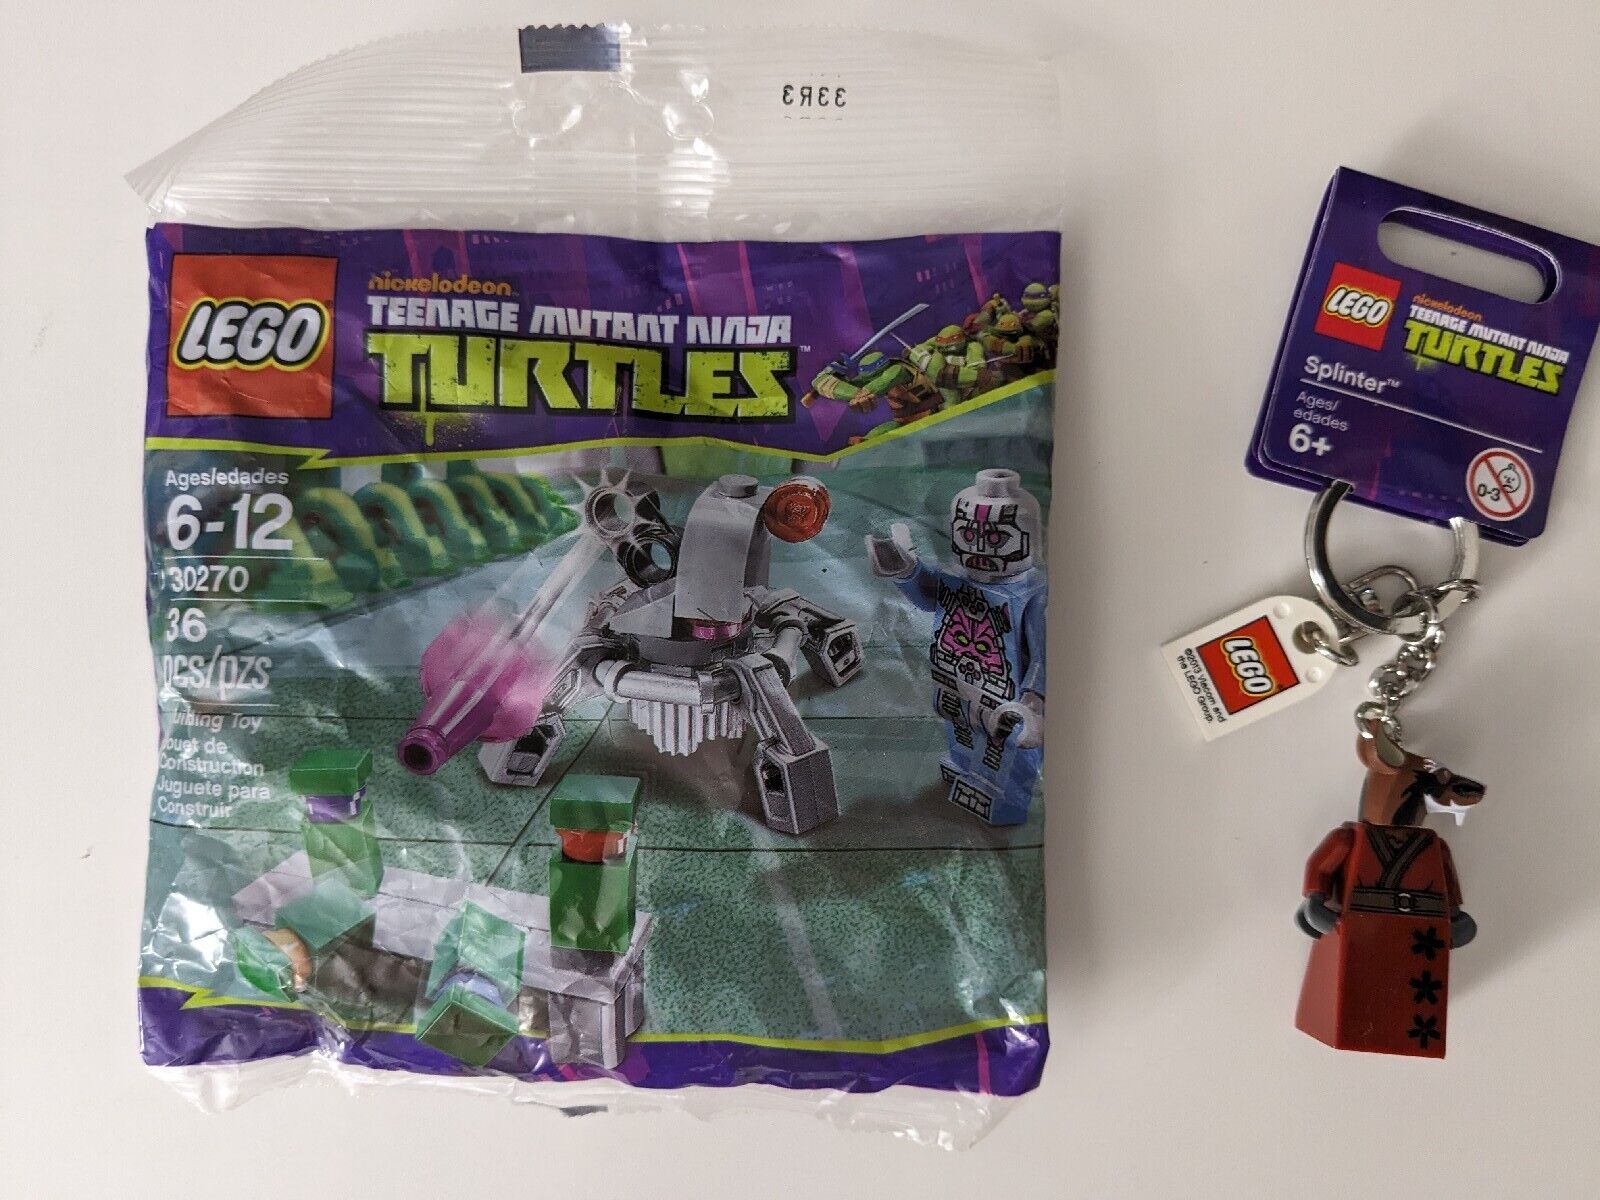 Lego Nickelodeon TMNT 30270 Toy and 850838 Splinter Keychain - Both New